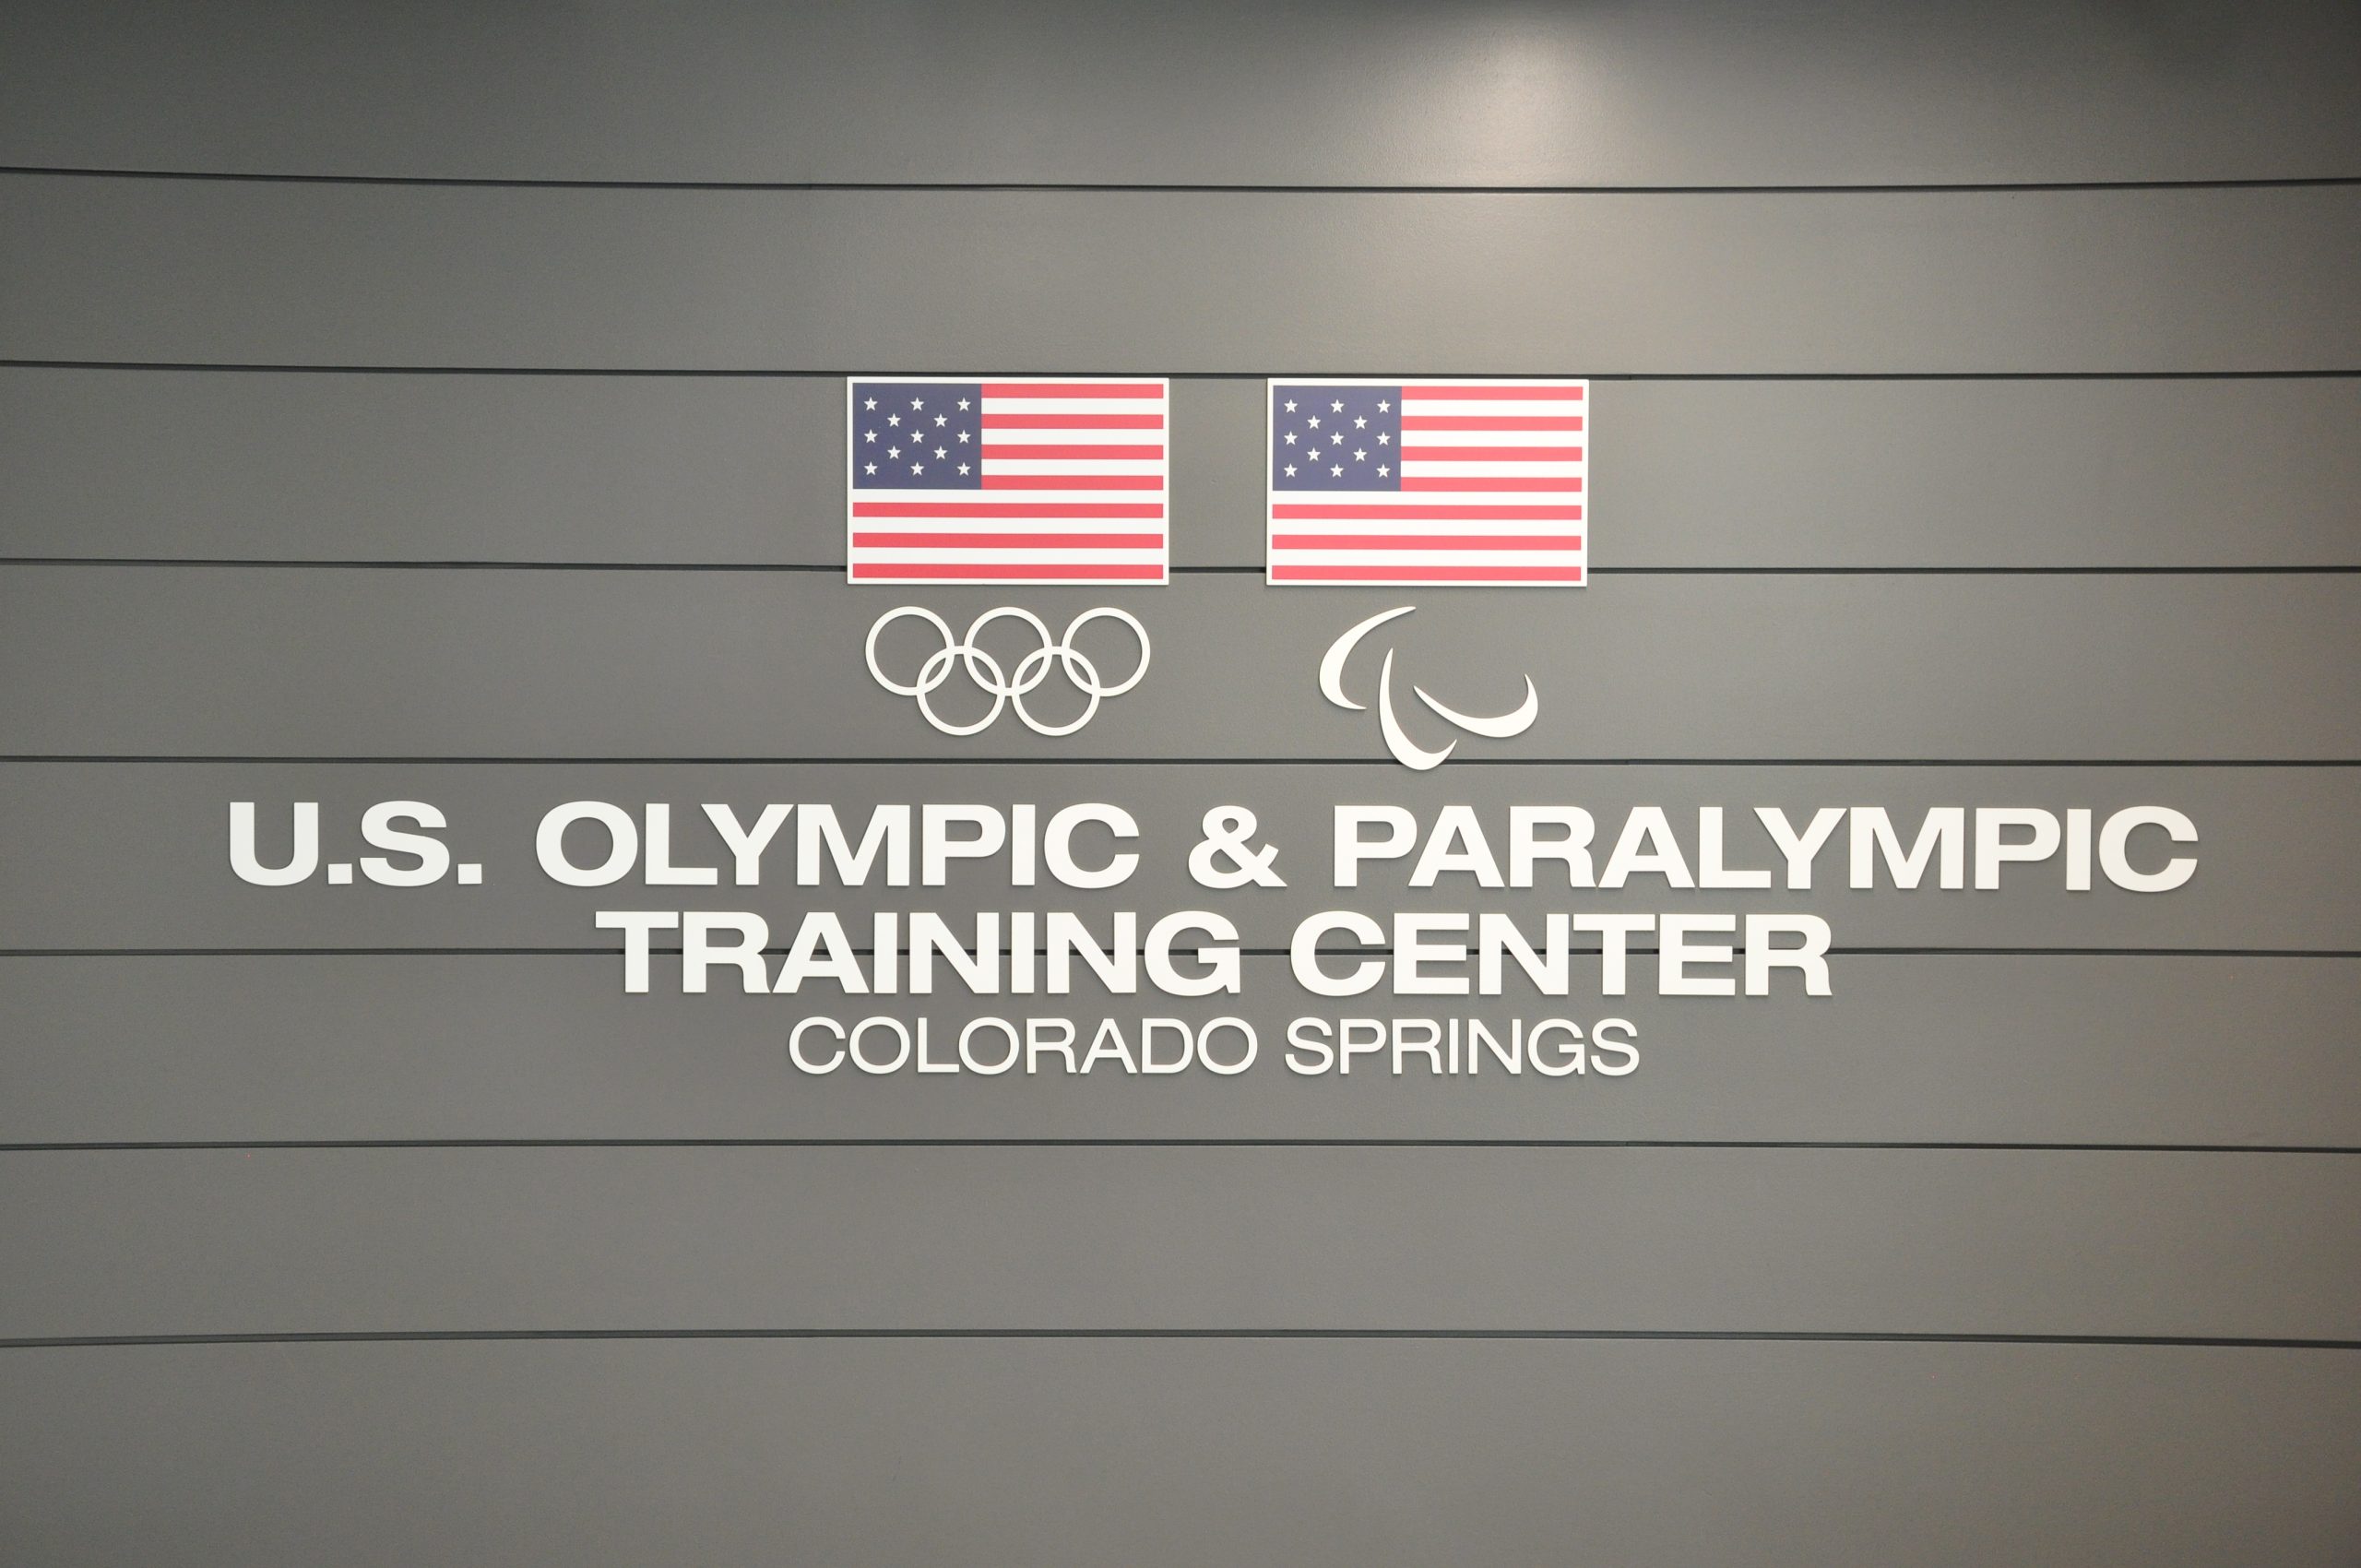 1. Training Center